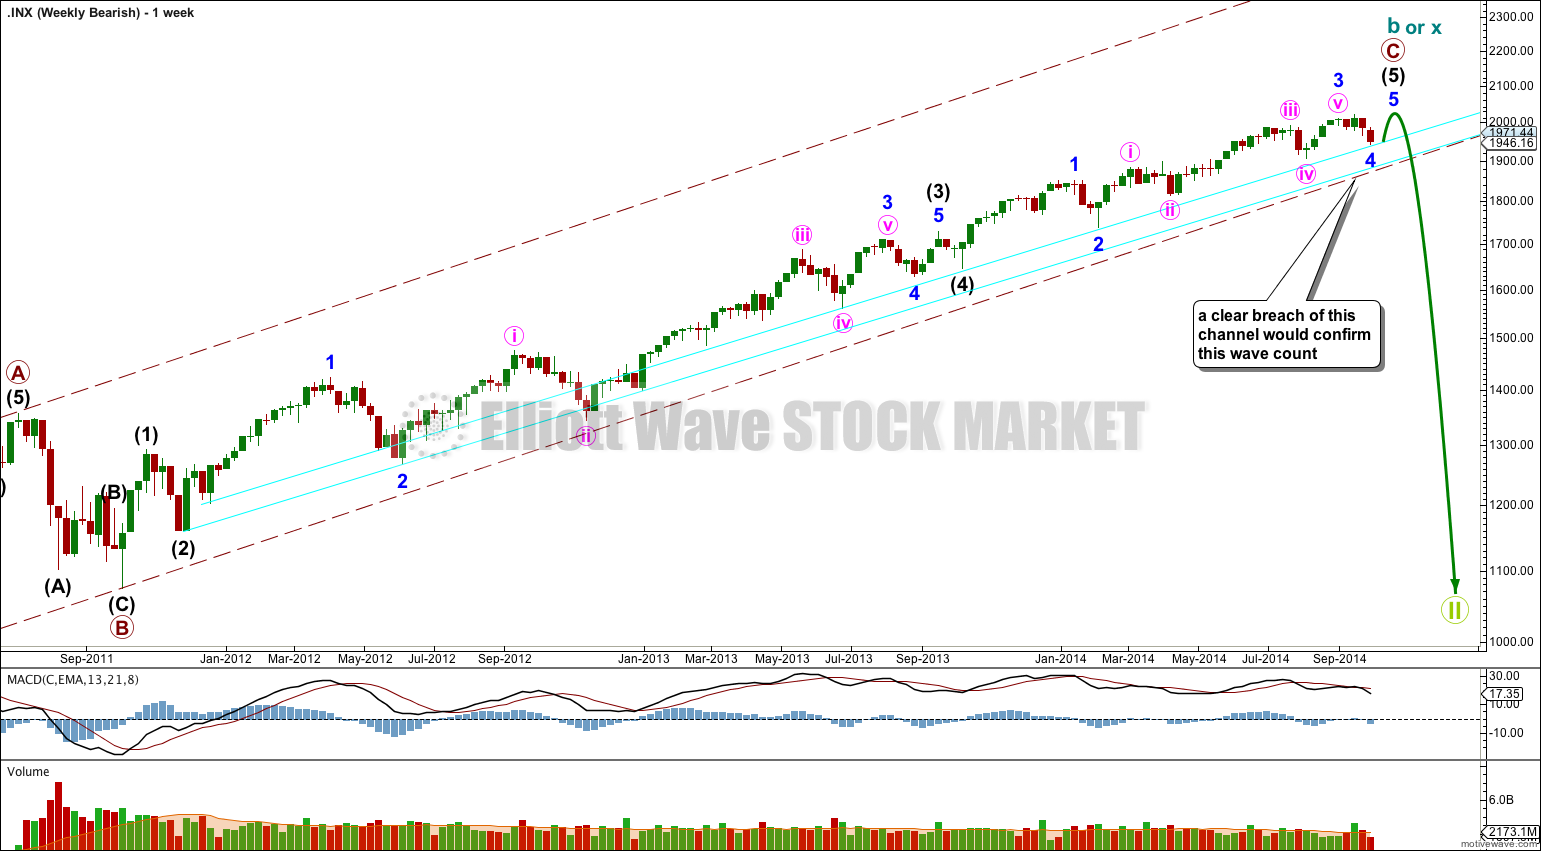 S&P 500 weekly bear 2014